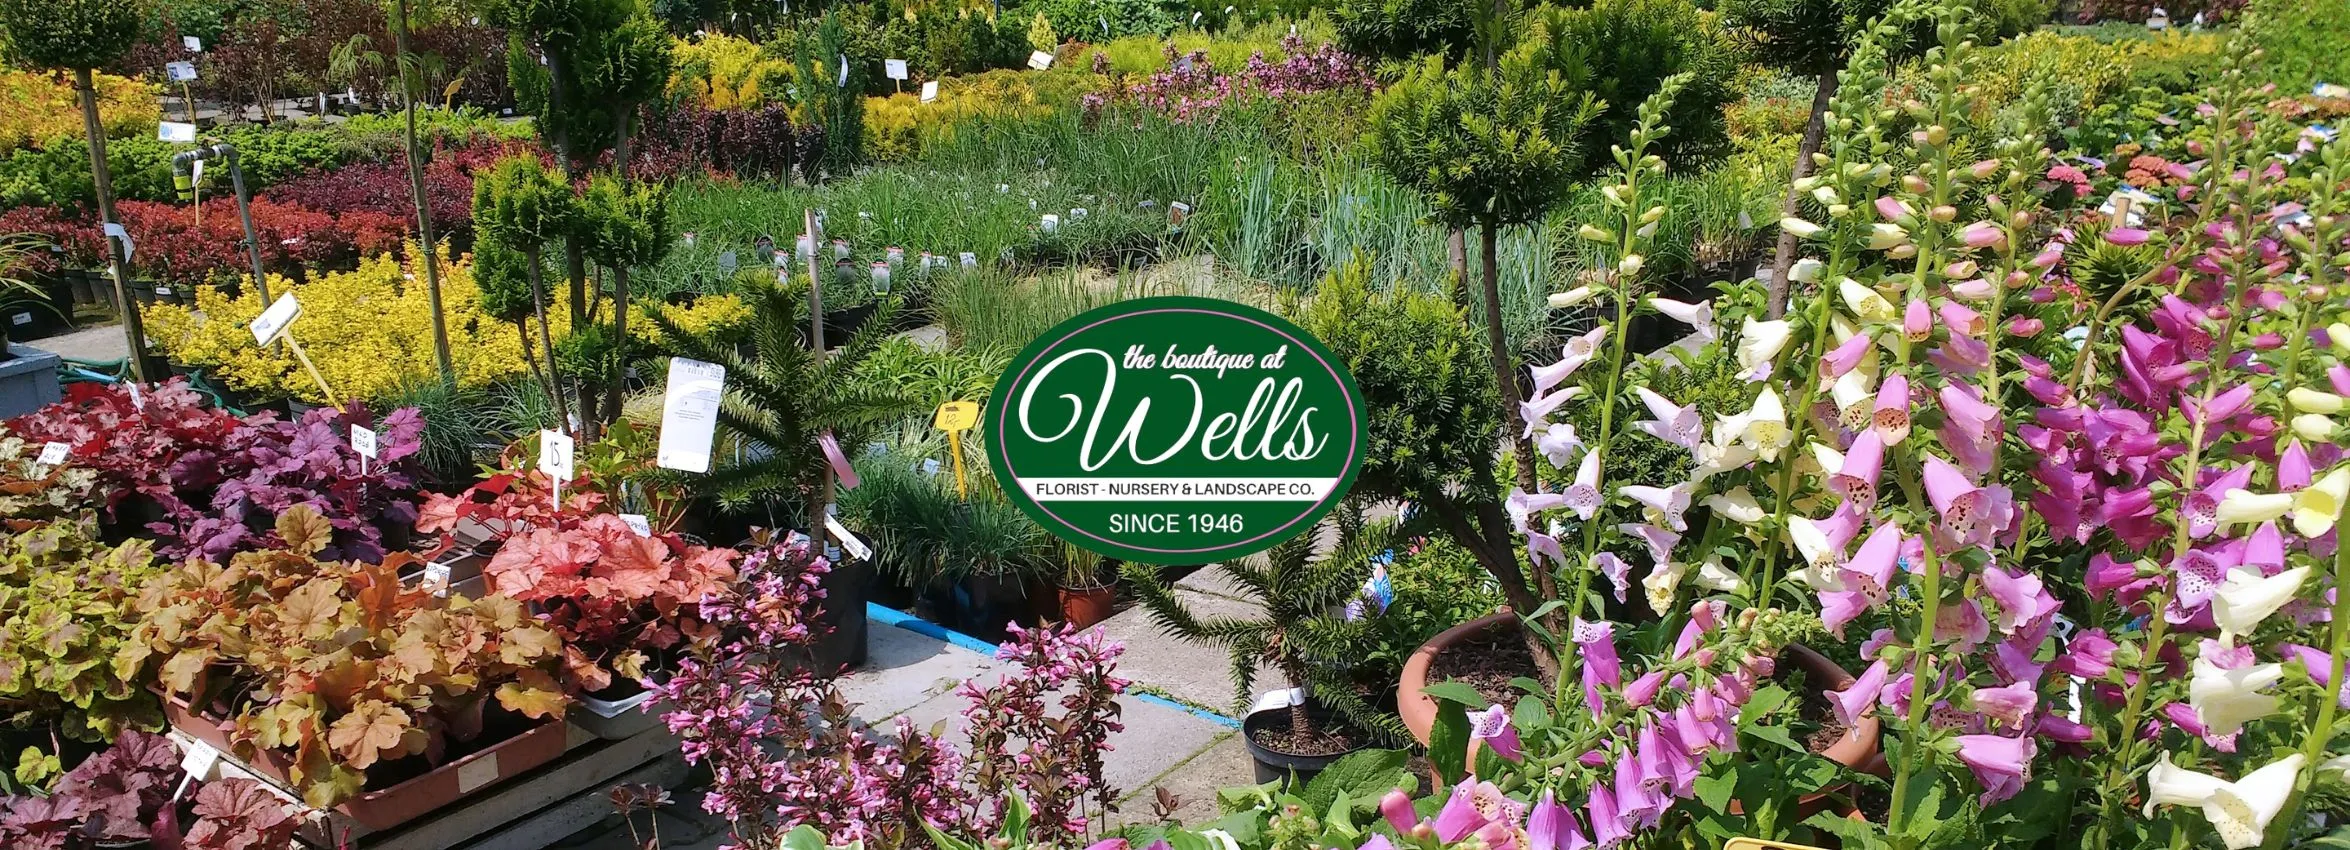 Wells-Florist-Nursery-and-Landscape-Co_Desktop_ET